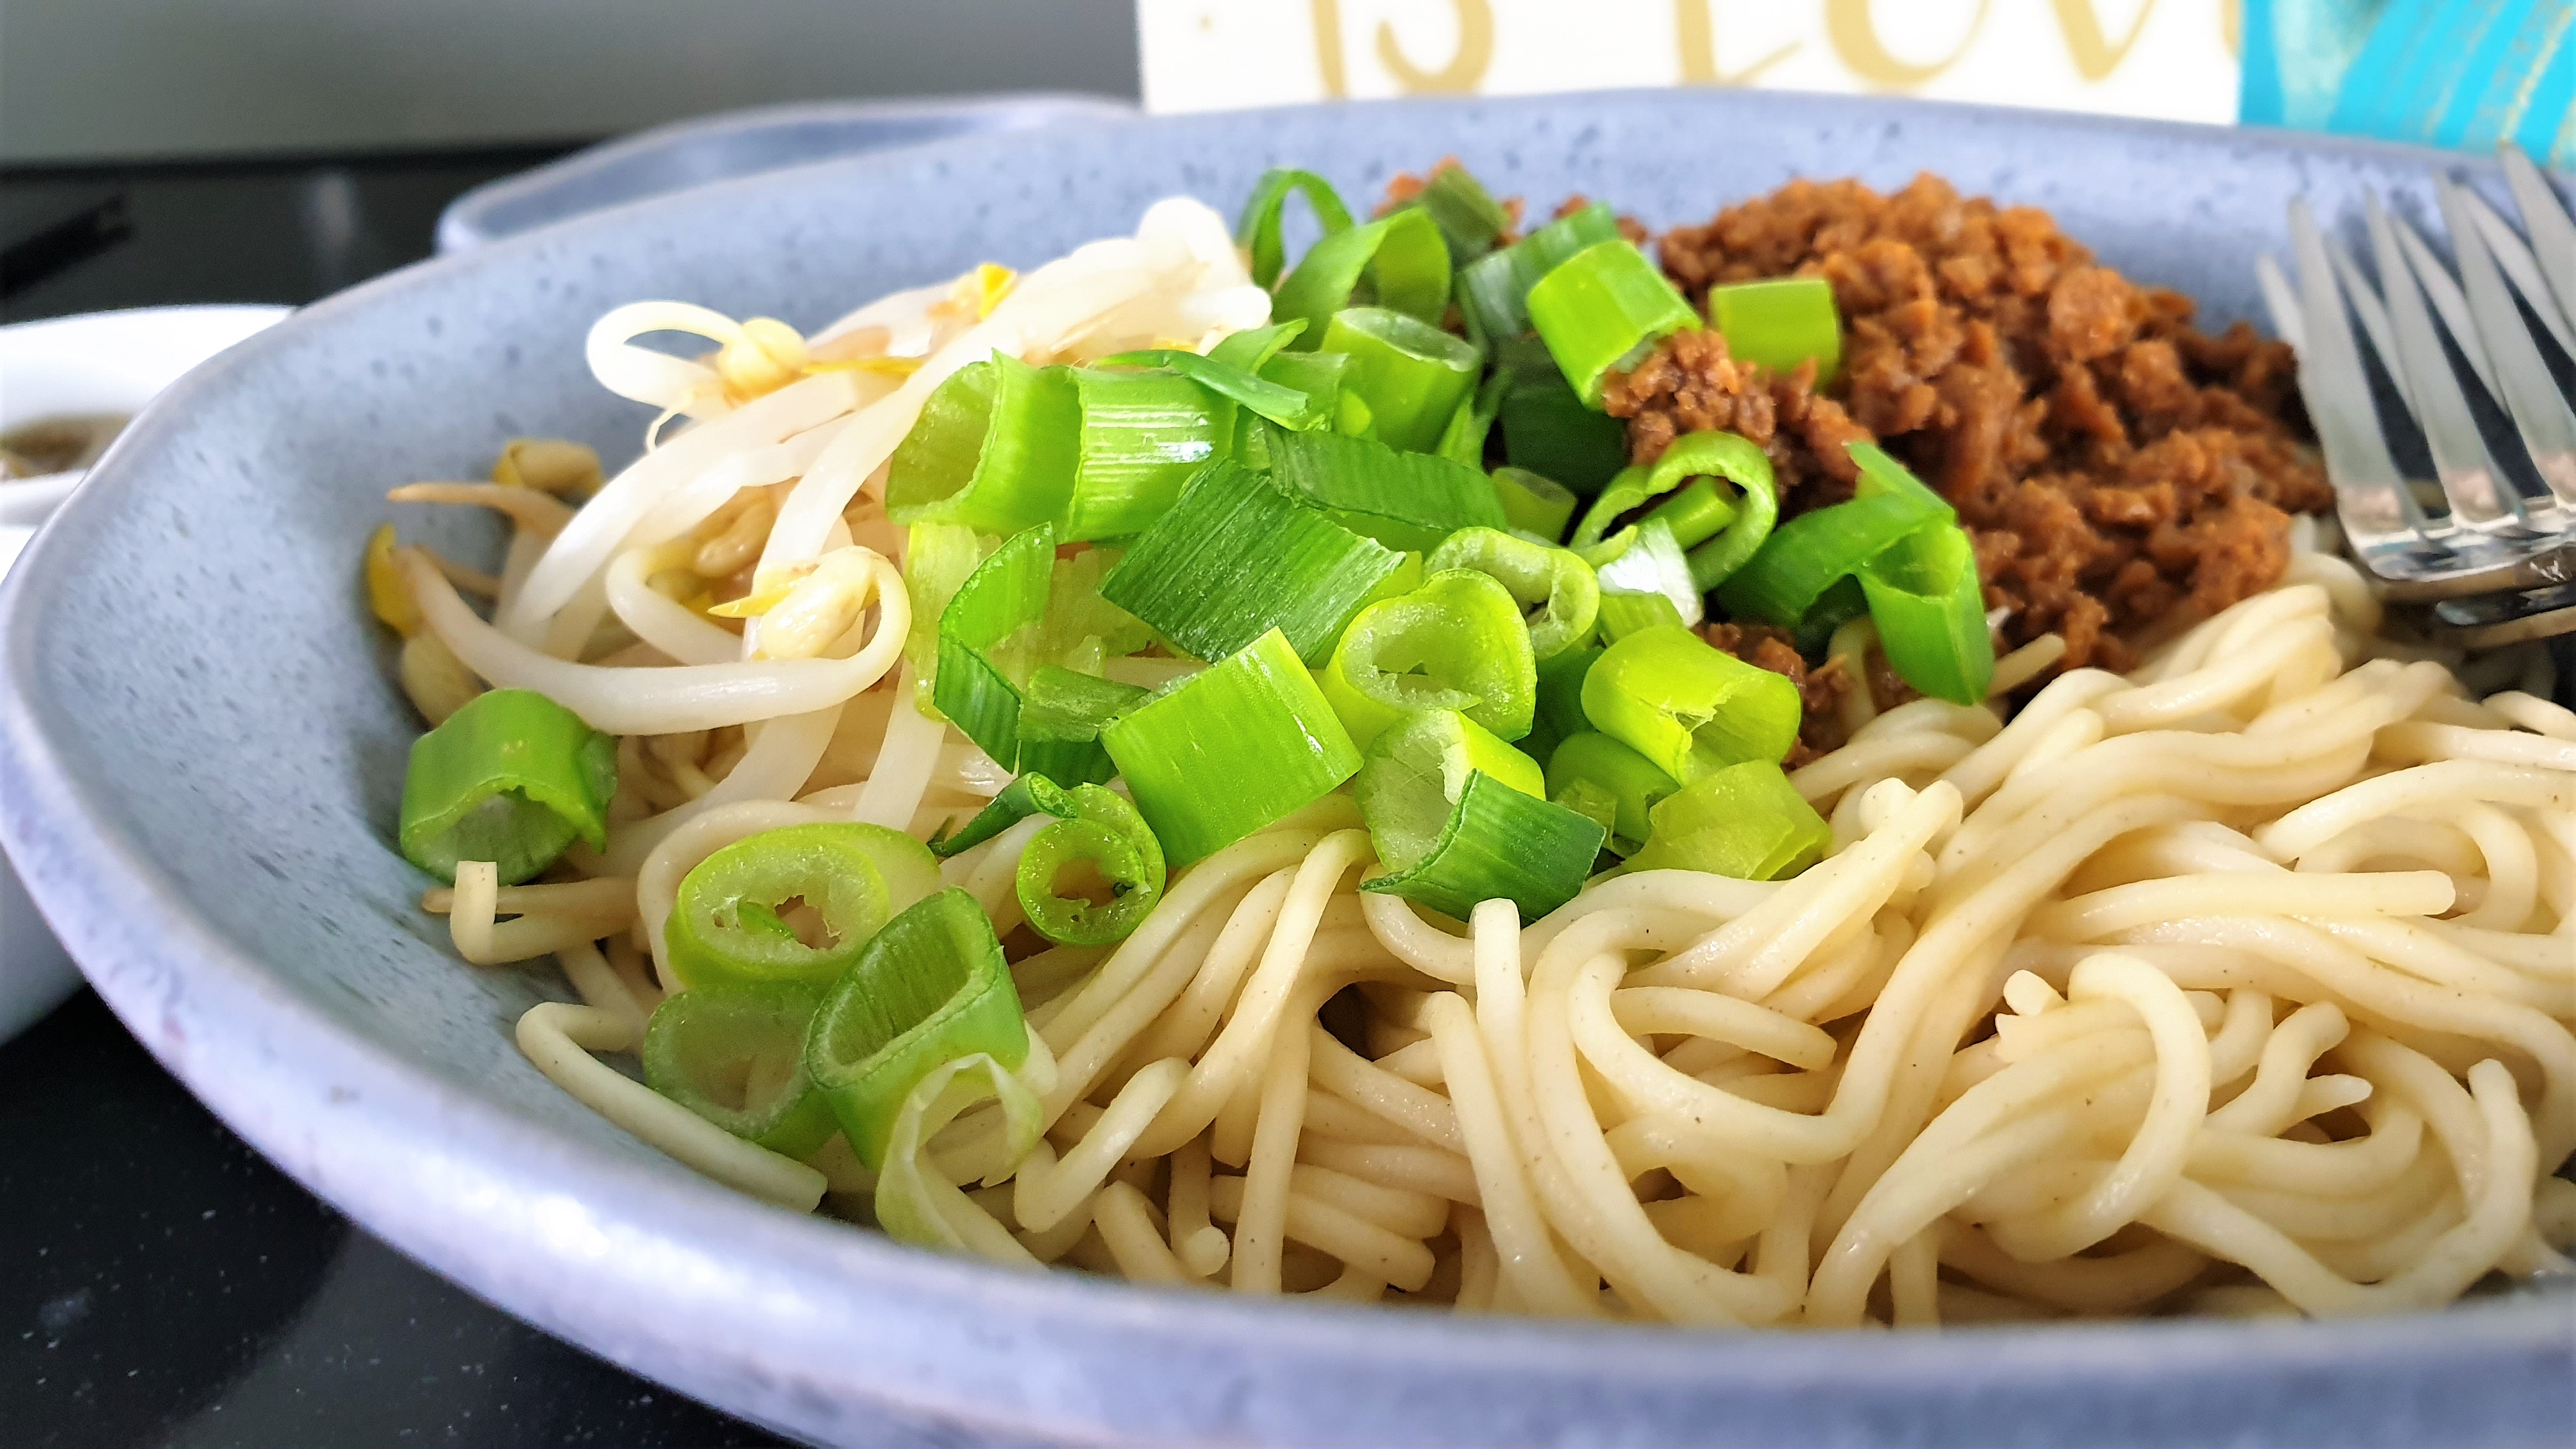 Vegan Hakka Noodles 《纯素客家面/ Fideos Veganos Hakka》 - Healthy Asian Cuisine